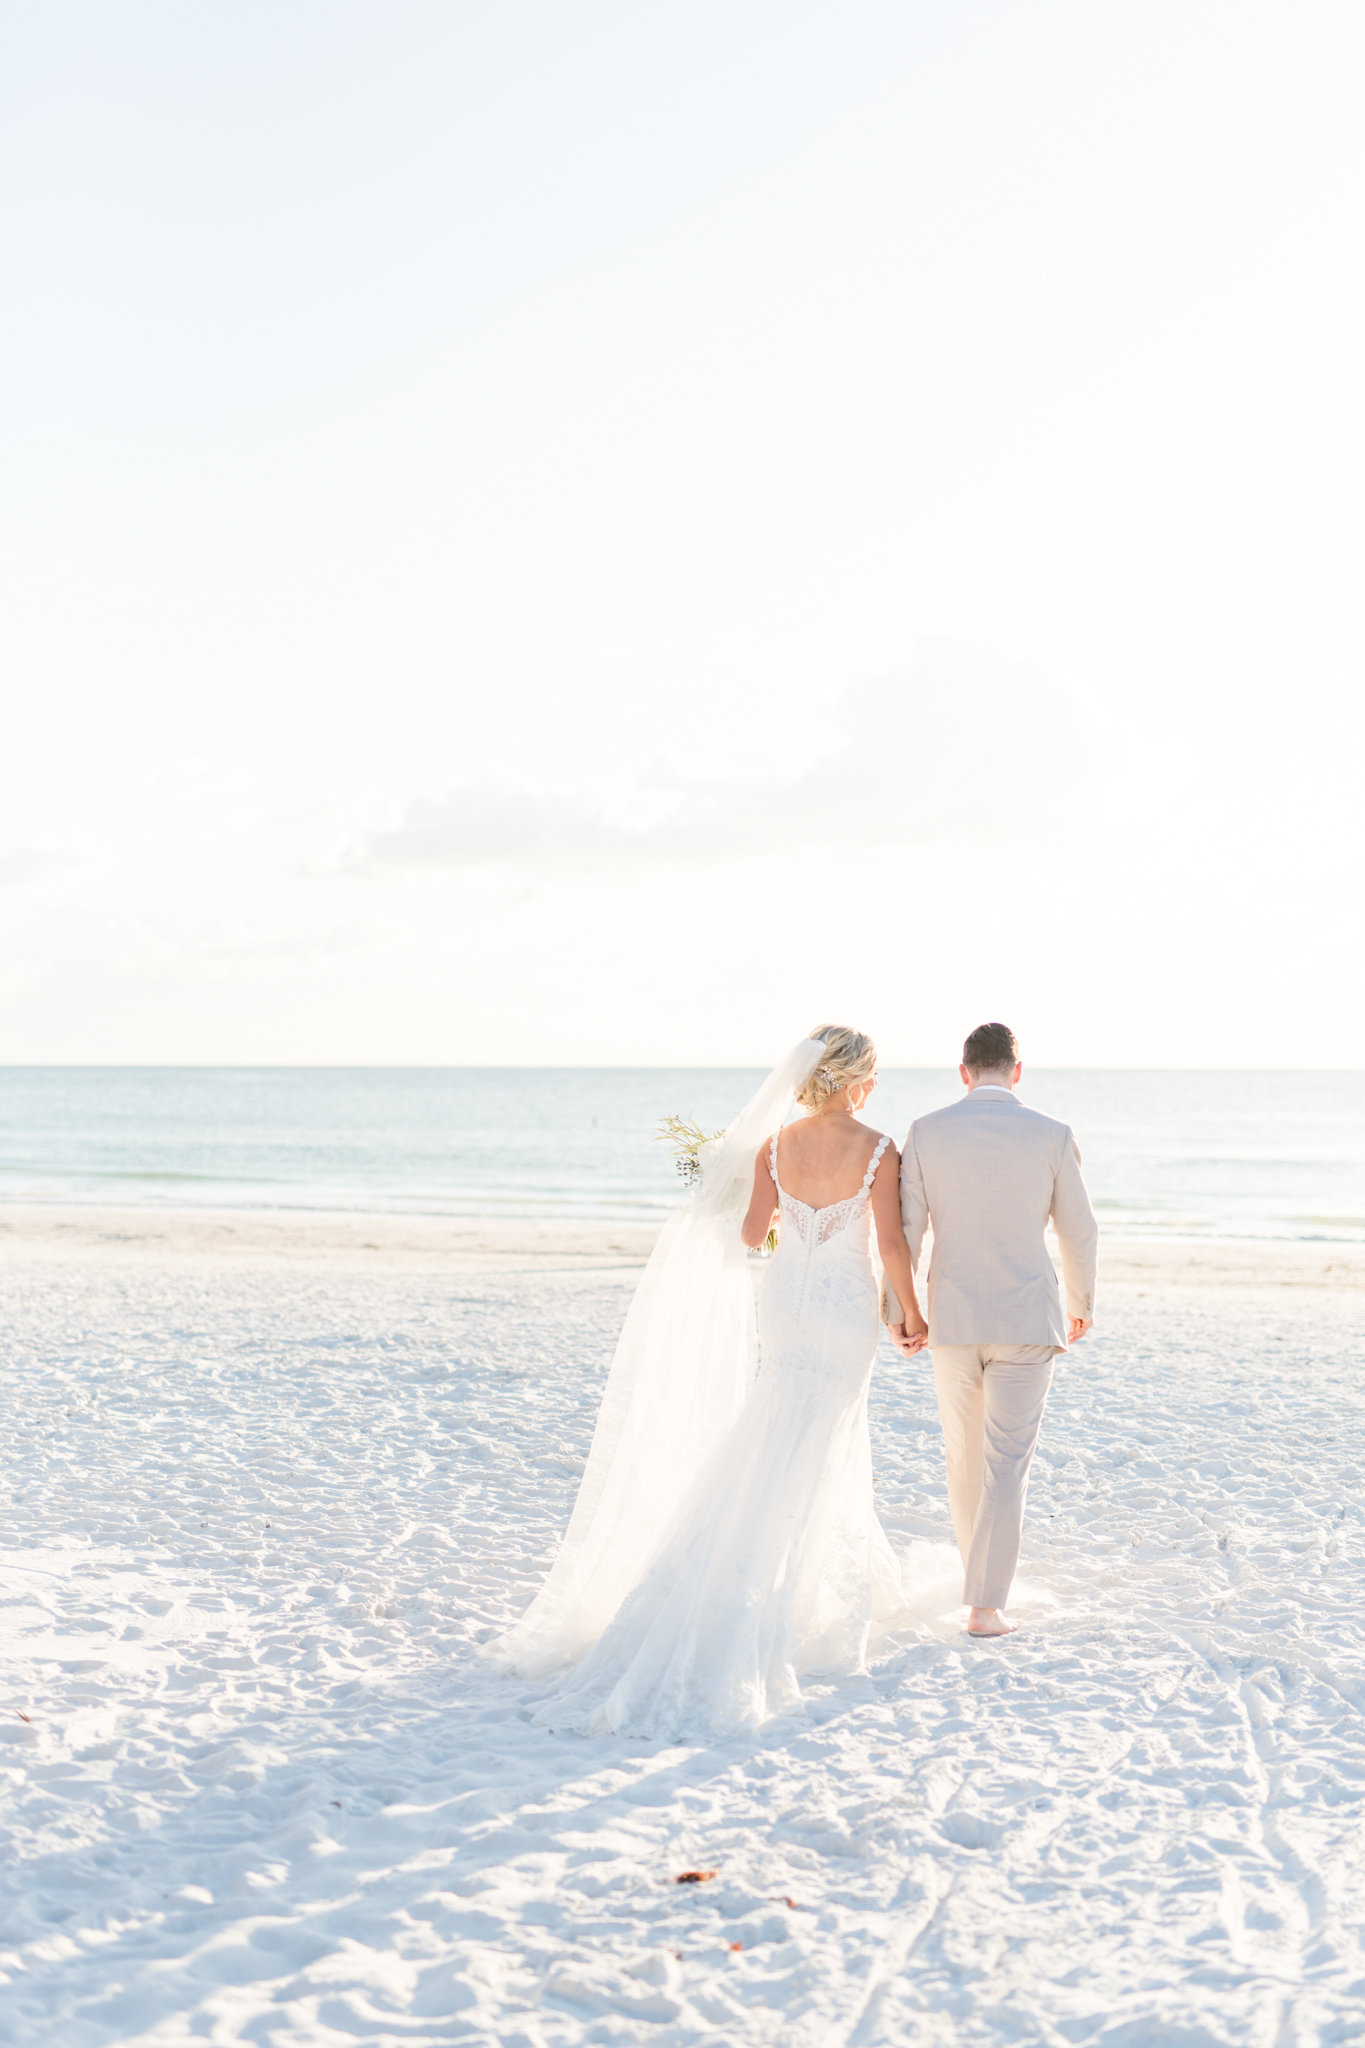 Bride and groom walk along beach.